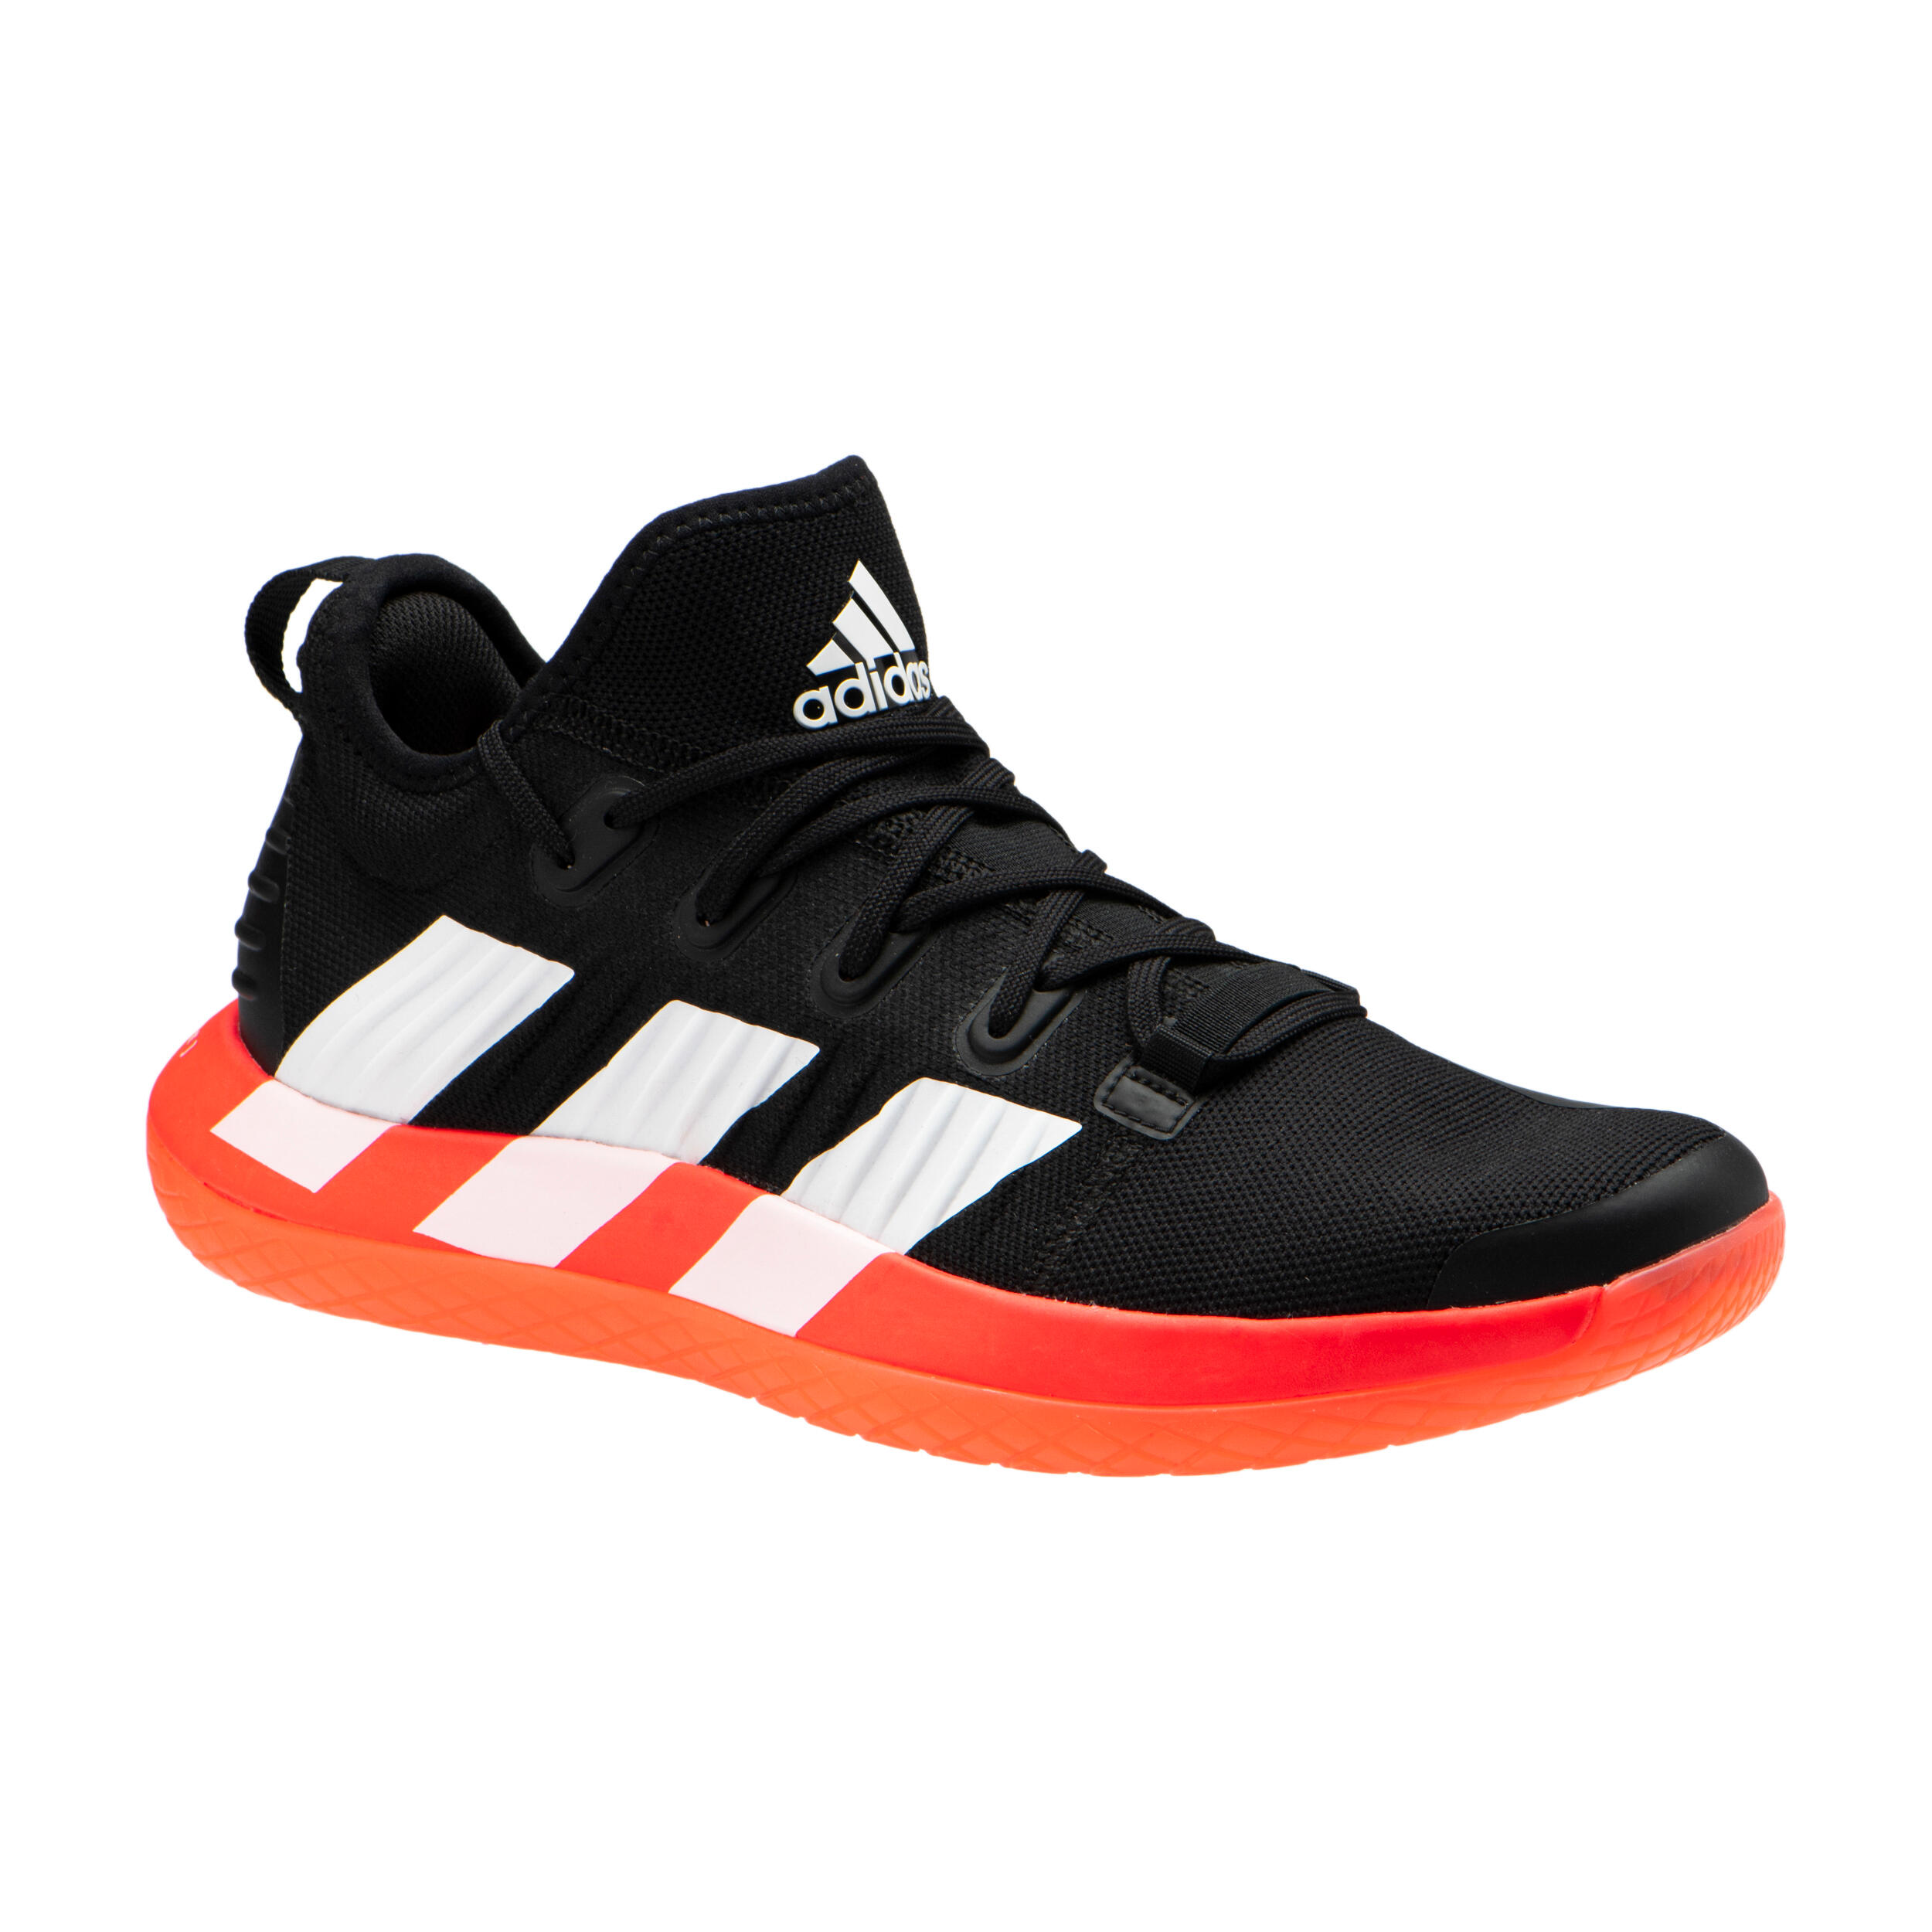 Chaussures de handball homme NEXT GEN ADIDAS noir / orange ECO